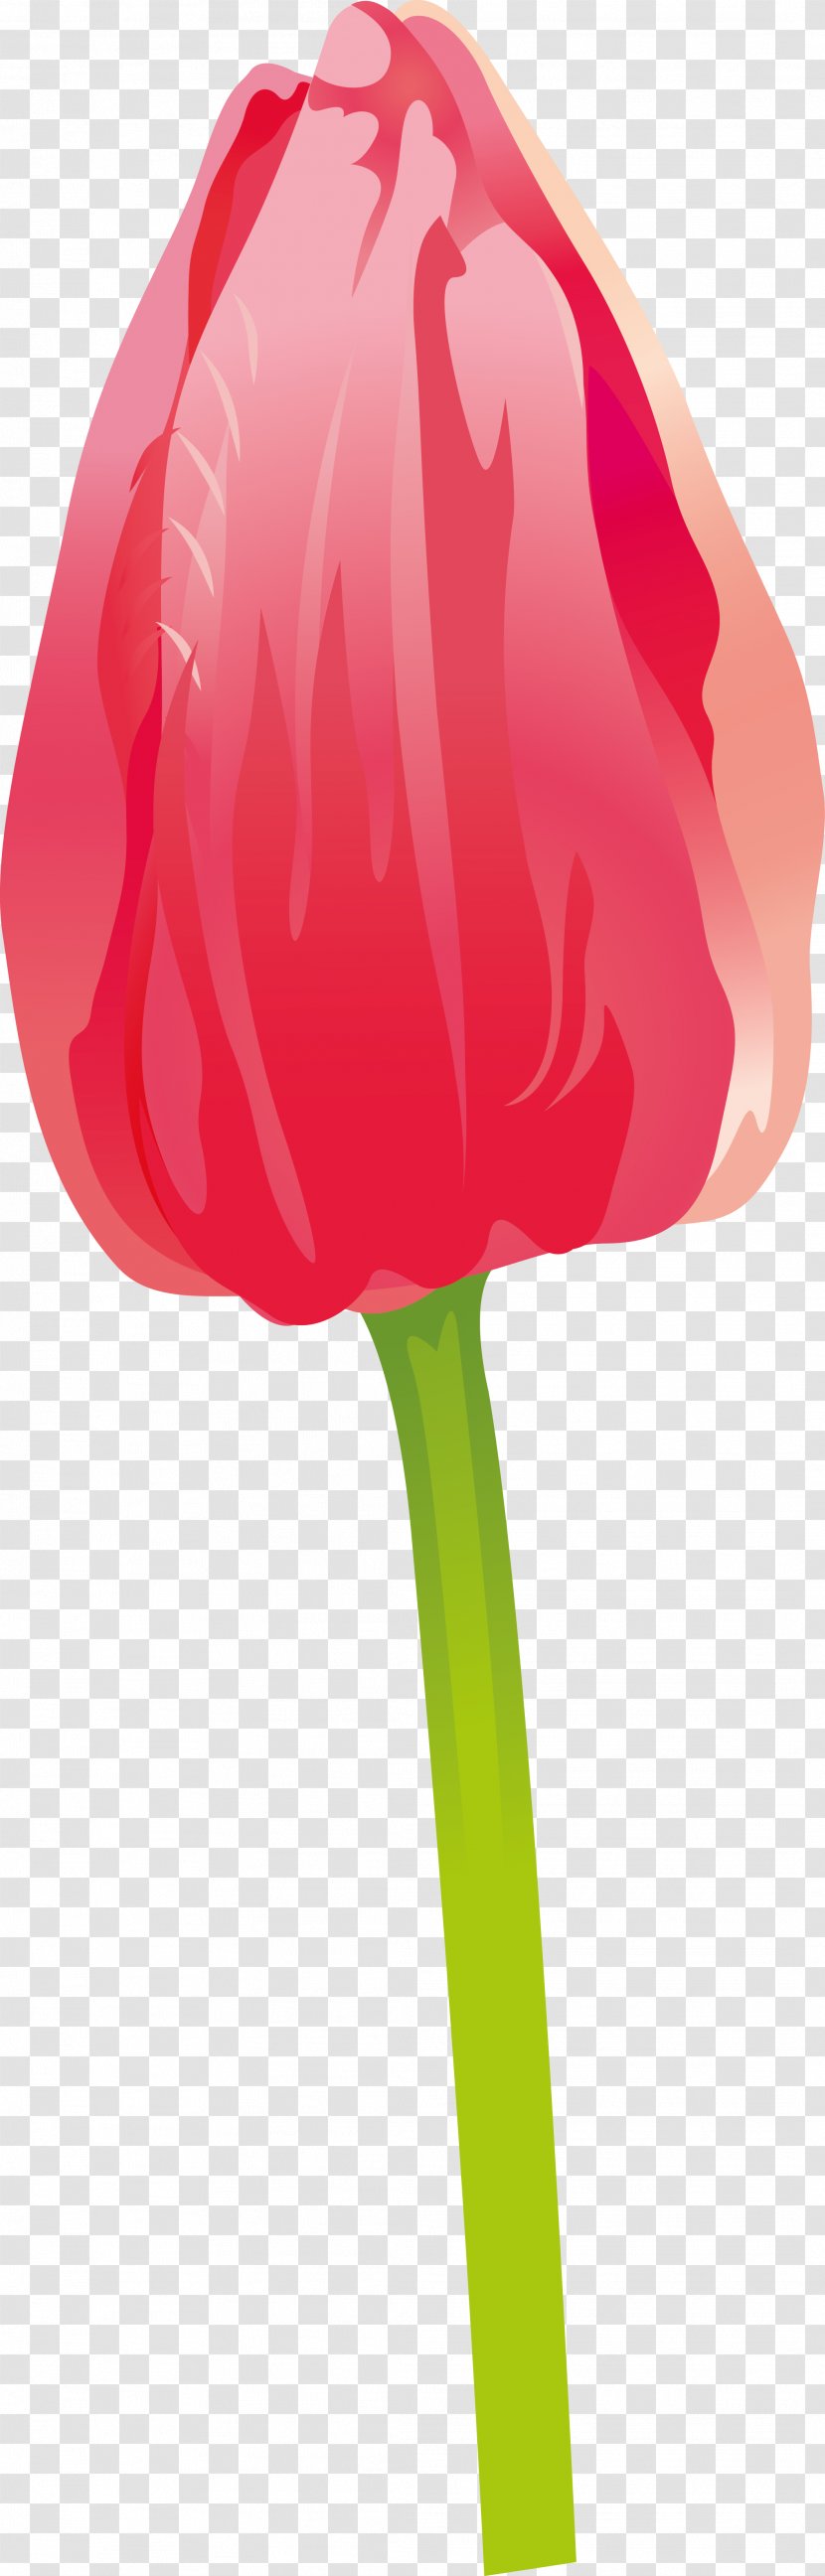 Flowering Plant Petal - Tulip Transparent PNG